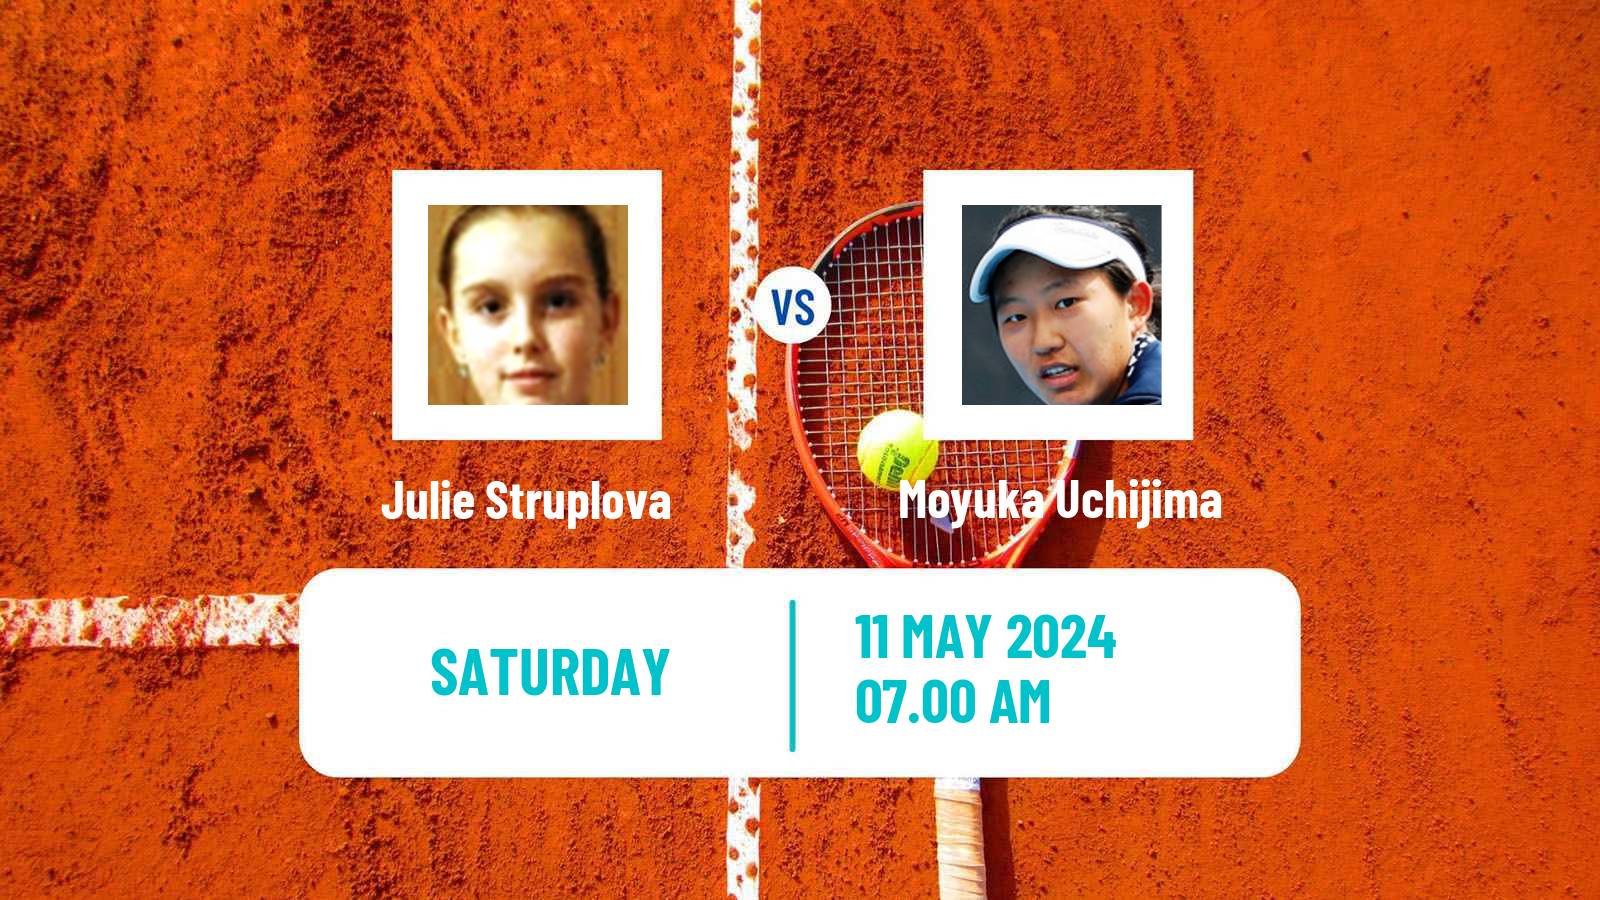 Tennis ITF W75 Trnava 2 Women Julie Struplova - Moyuka Uchijima